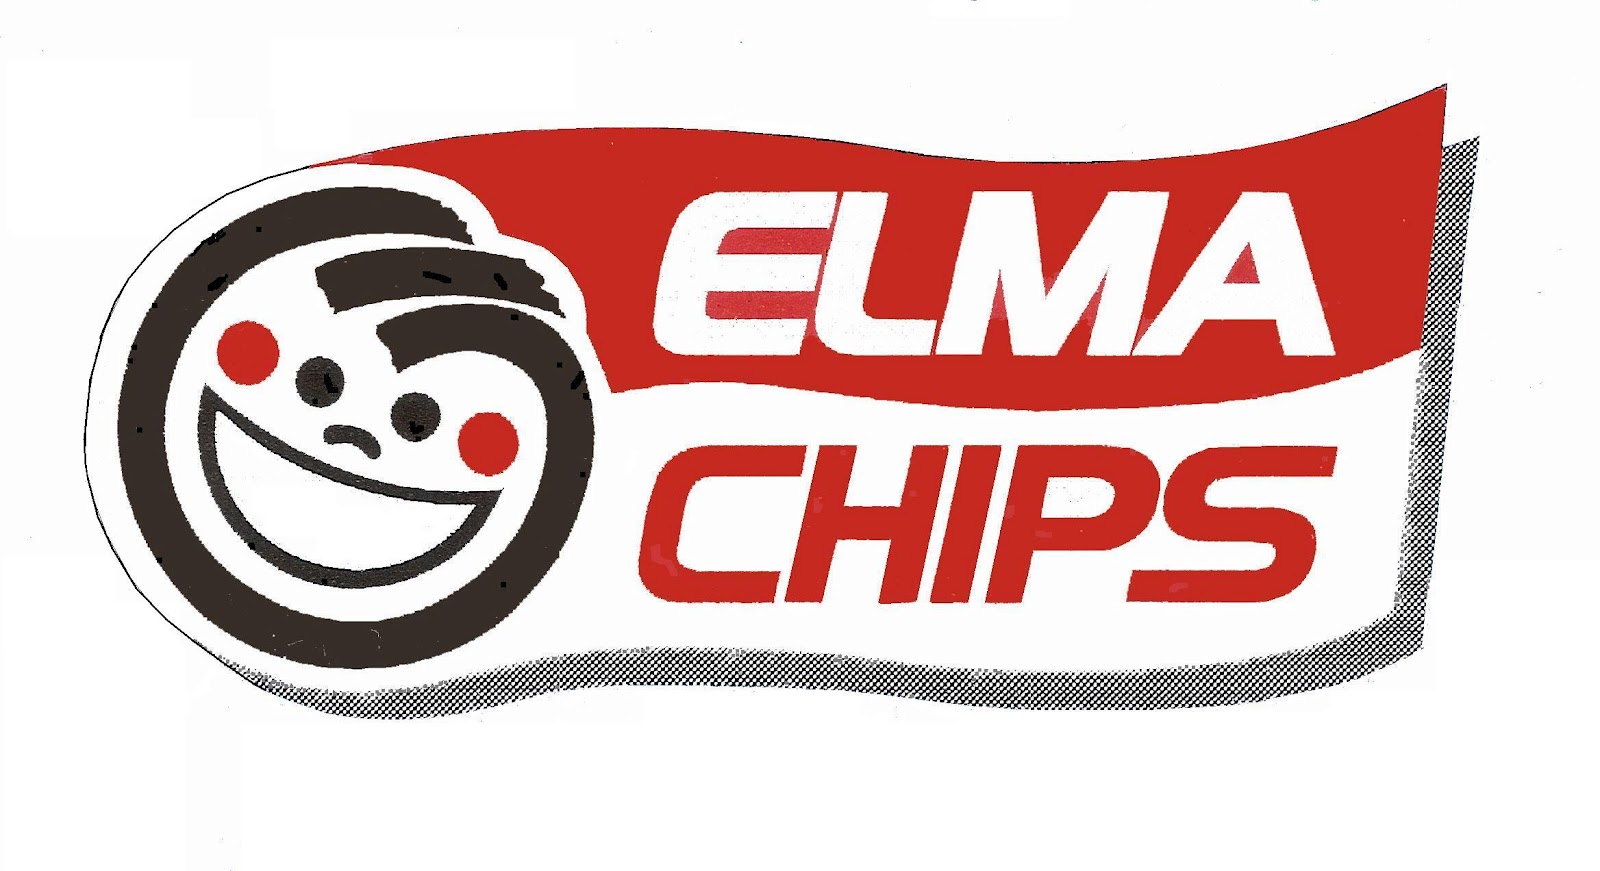 ELMA CHIPS